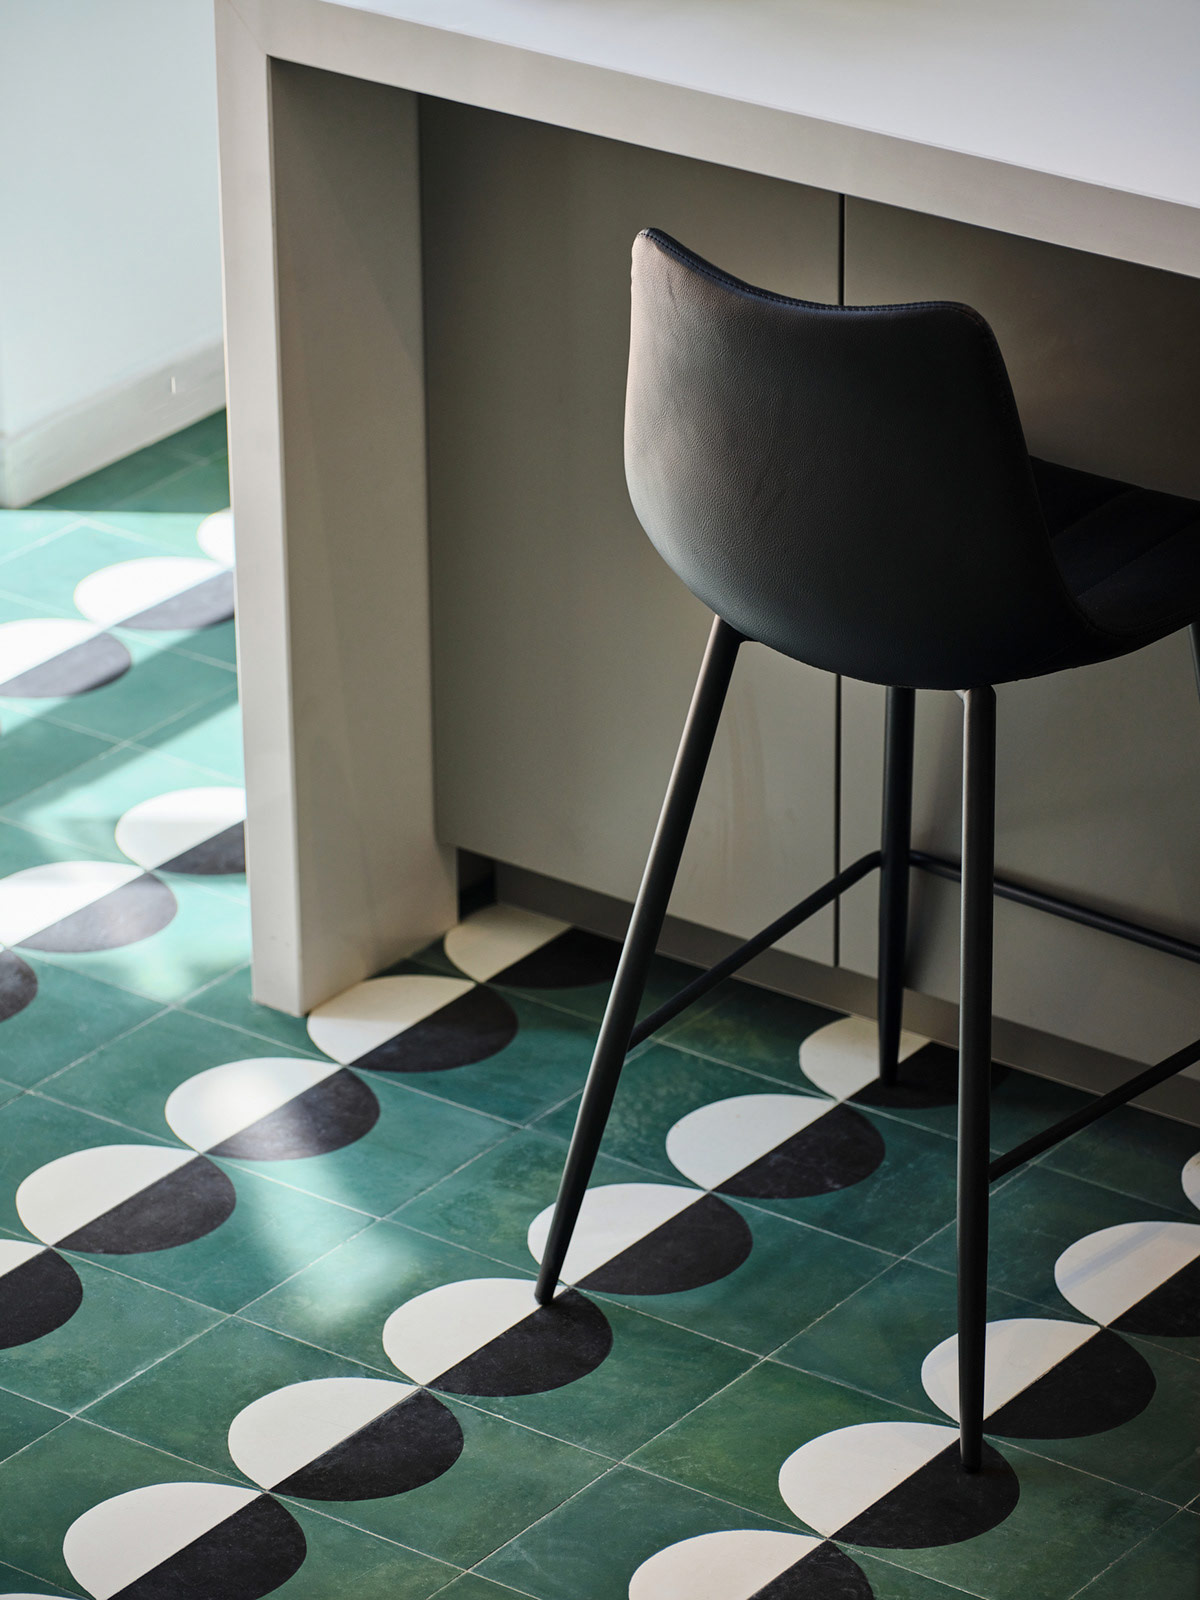 geometric-floor-tiles.jpg (1200×1600)